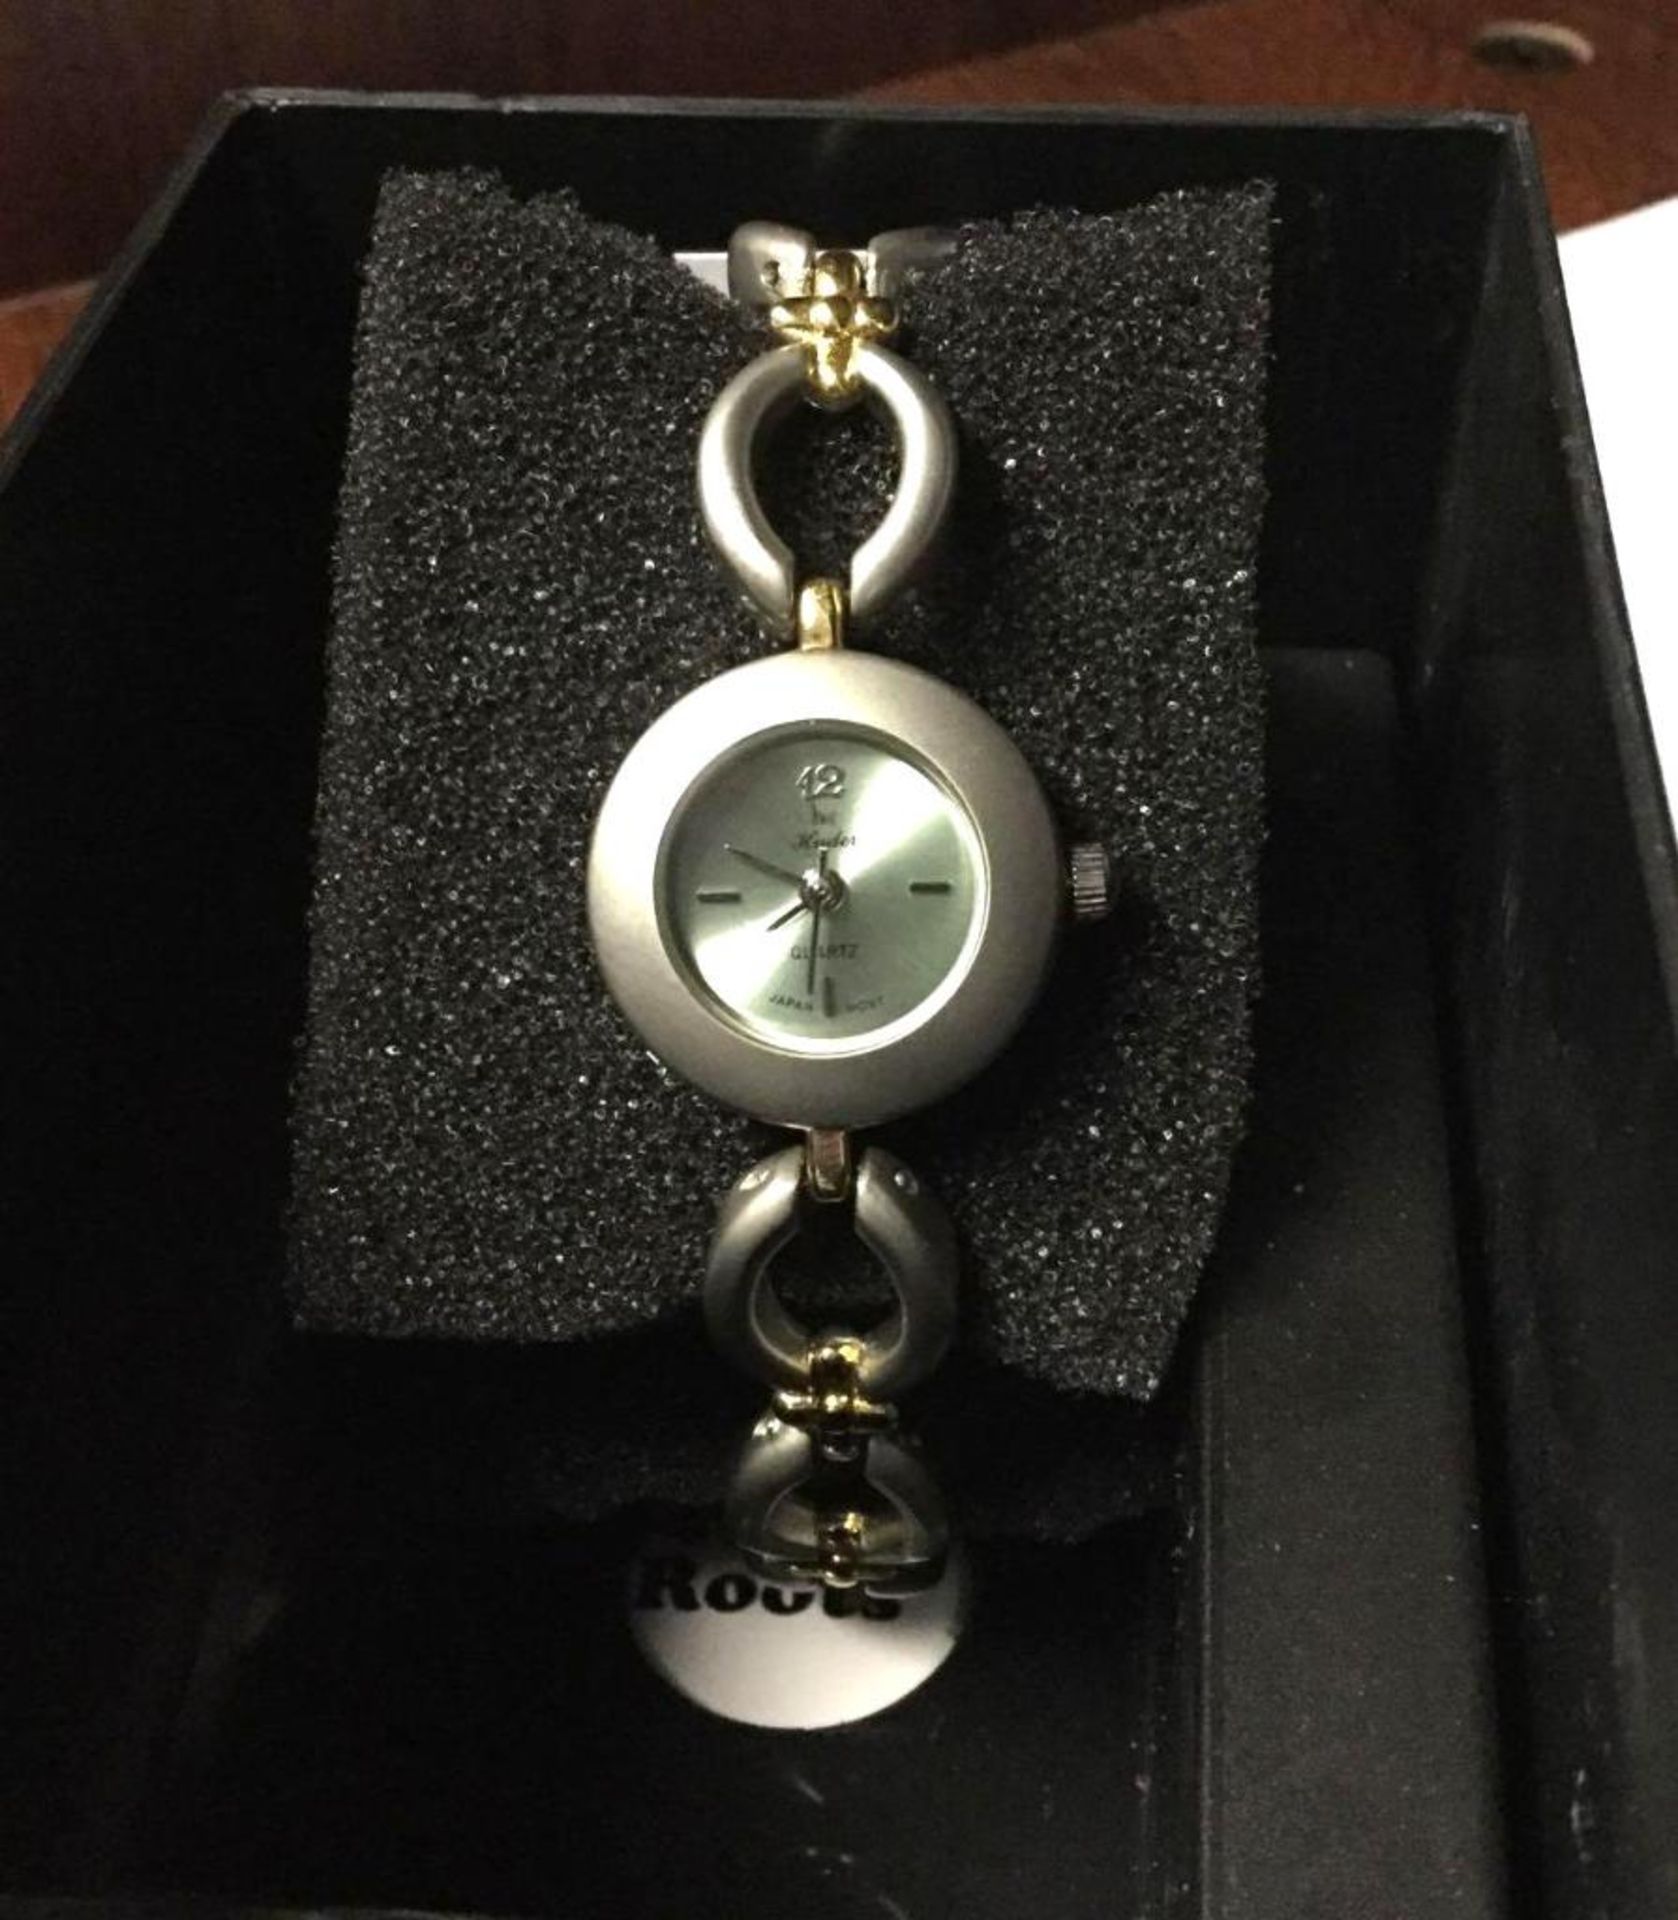 Kuder Ladies Watch - silver with